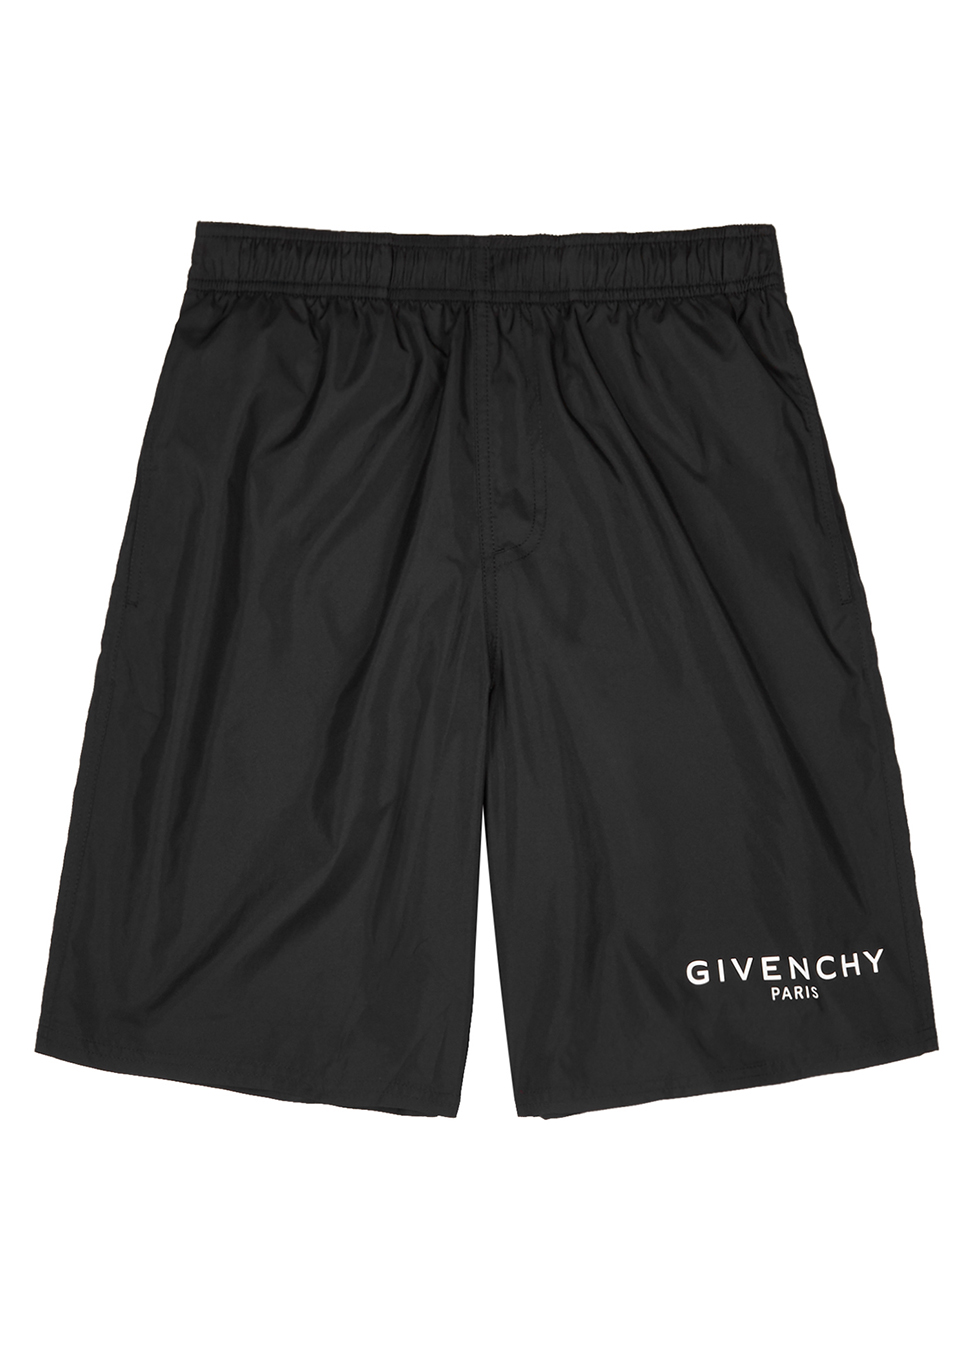 givenchy swim shorts black